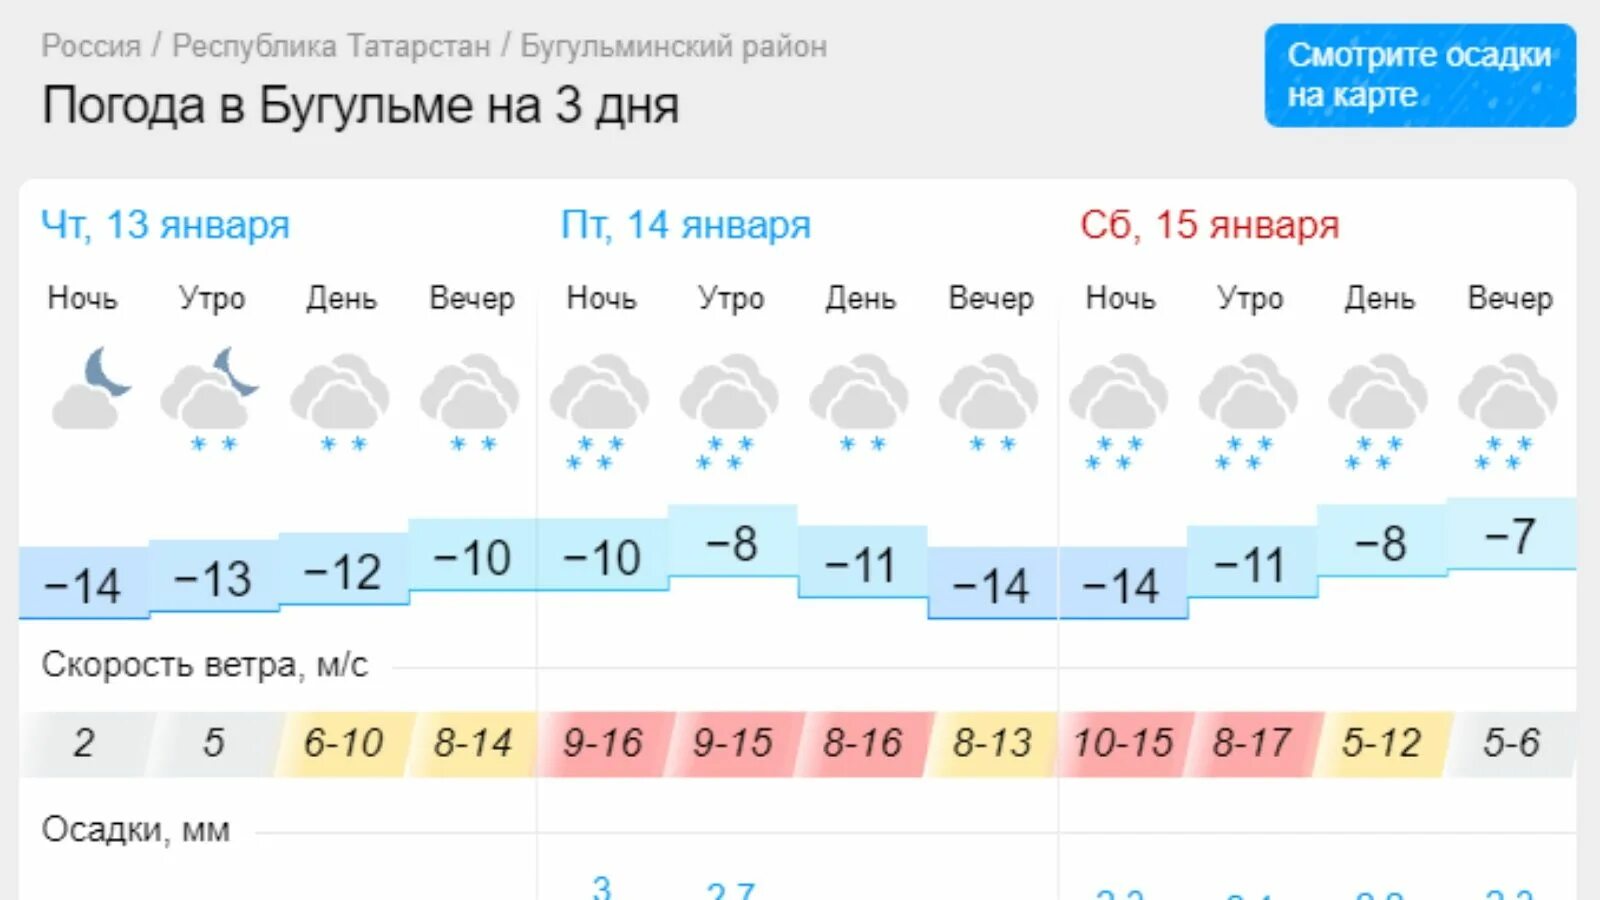 Погода в татарстане по часам. Погода в Бугульме. Погода в Татарстане. Климат Татарстана. Погода в Татарстане на 14 дней.